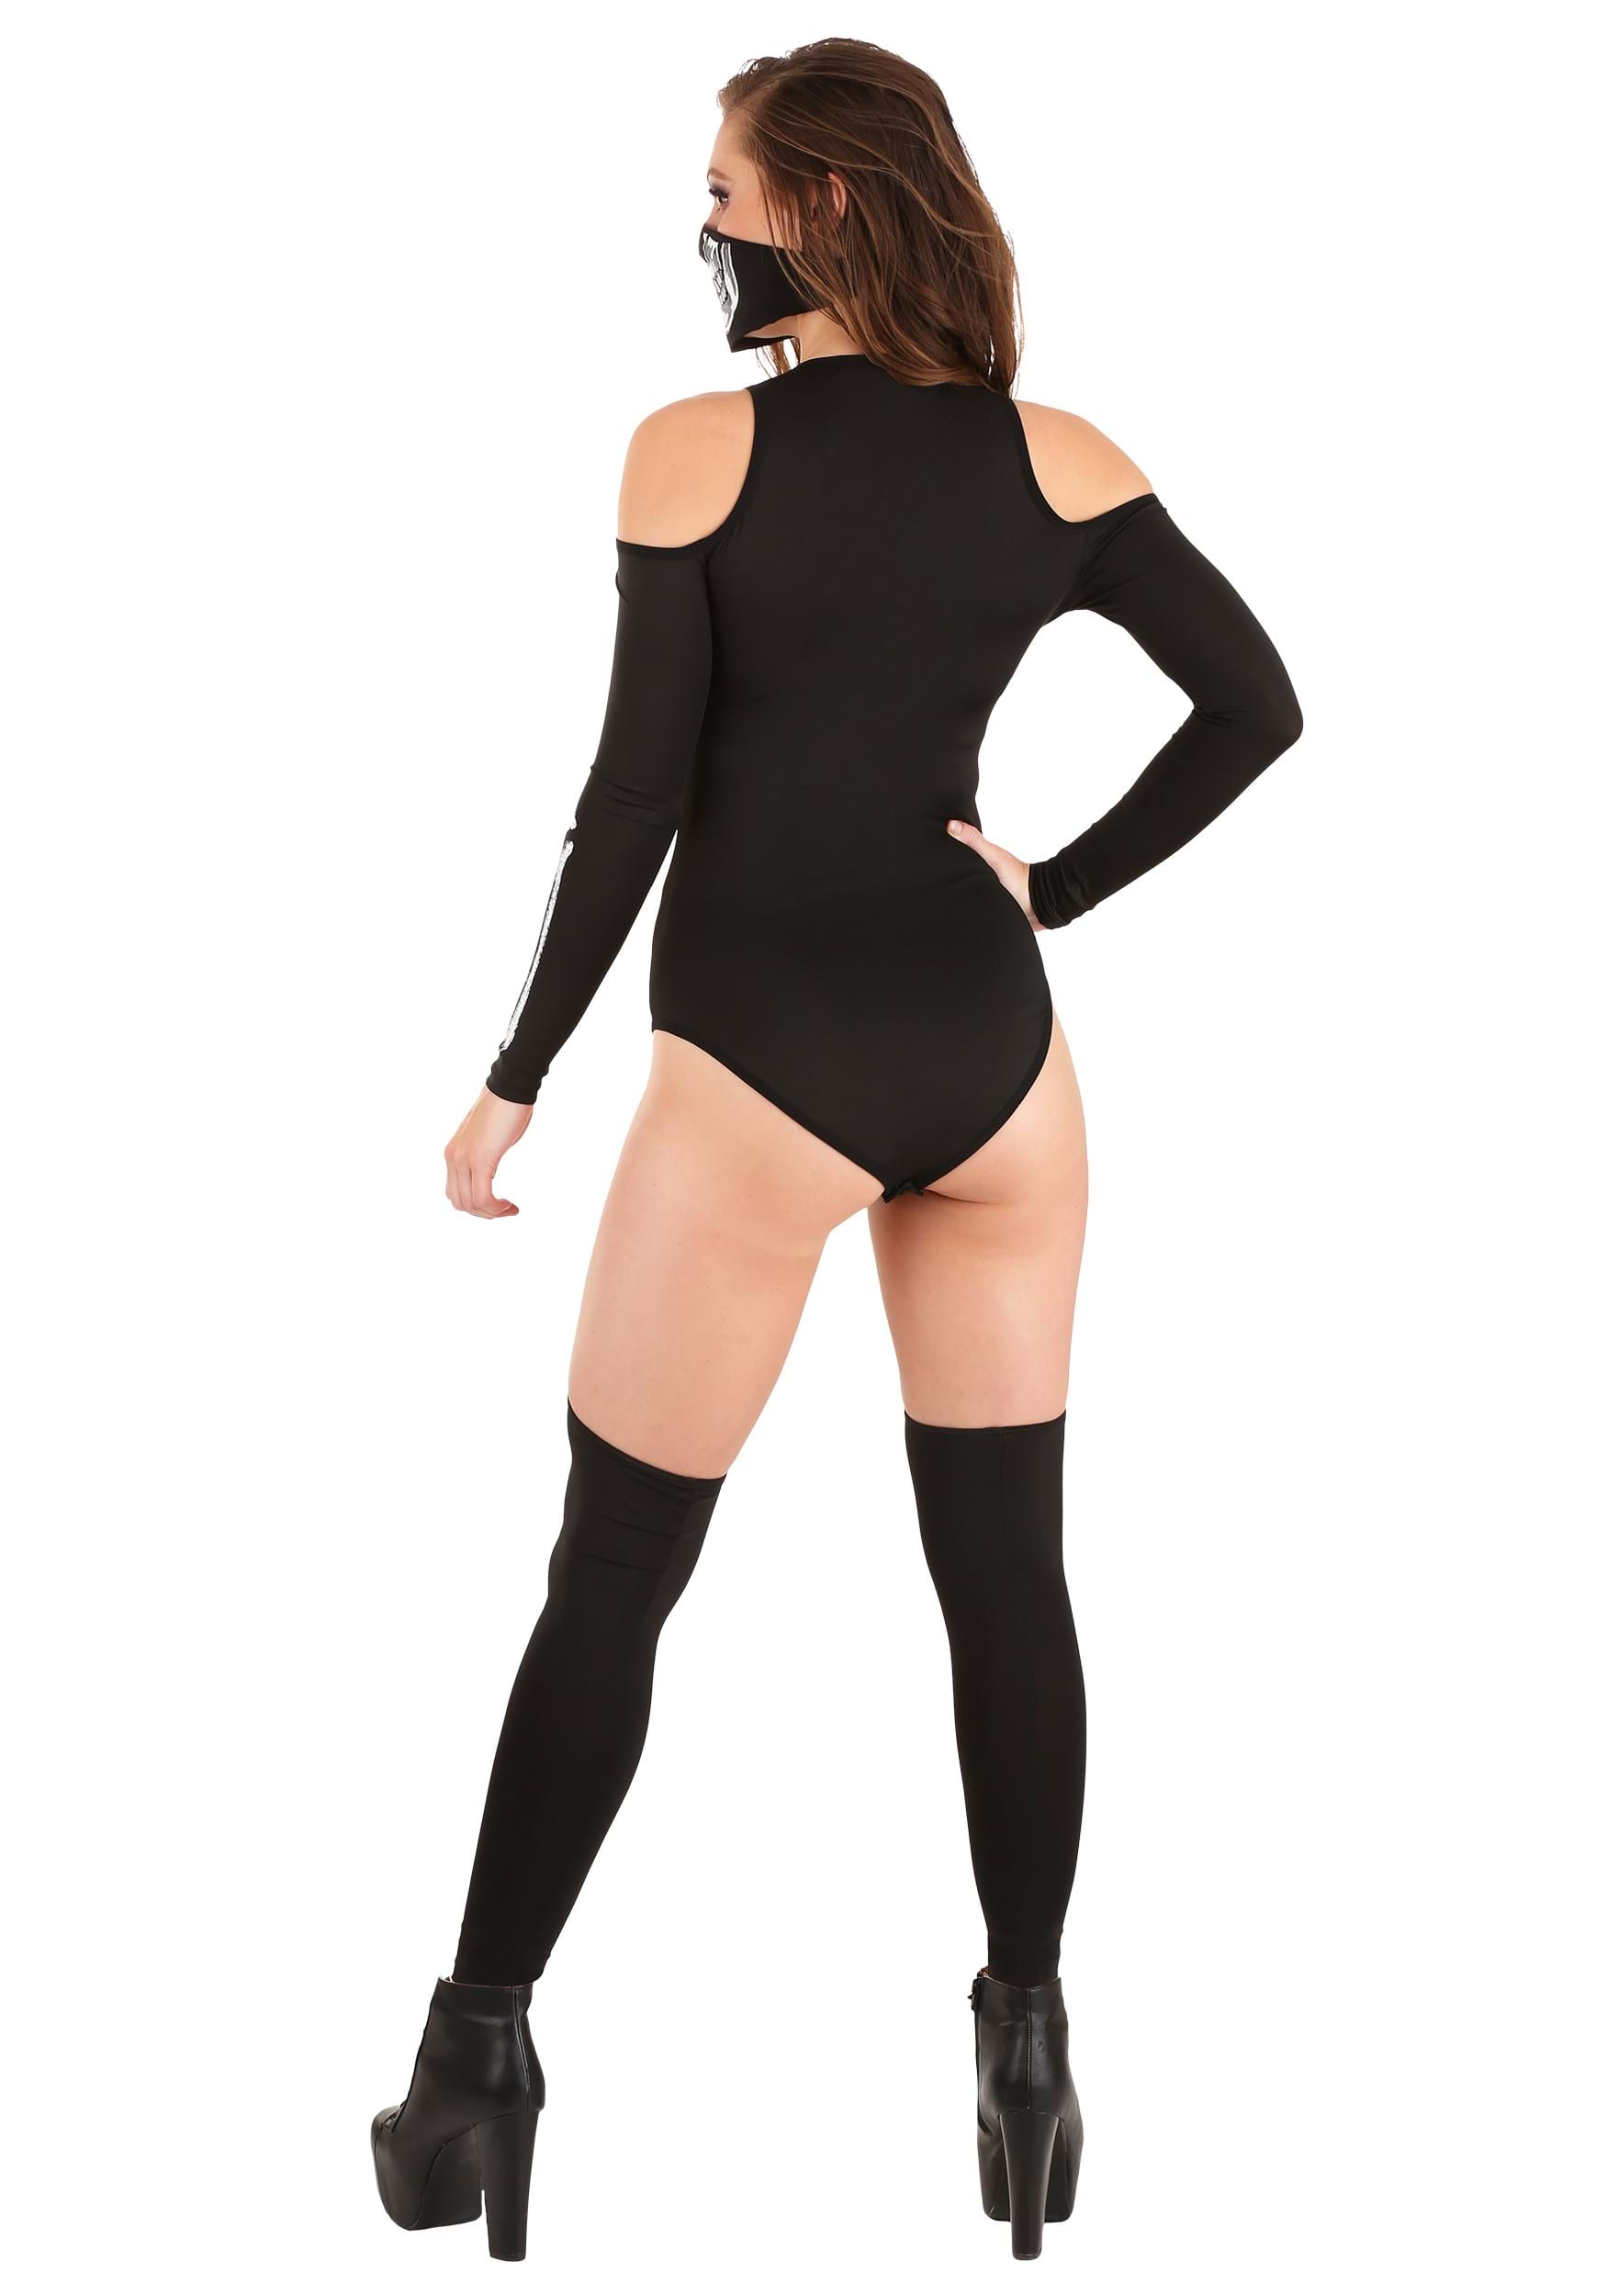 https://images.halloweencostumes.com/products/46422/2-1-167693/skeleton-bodysuit-womens-costume-back.jpg